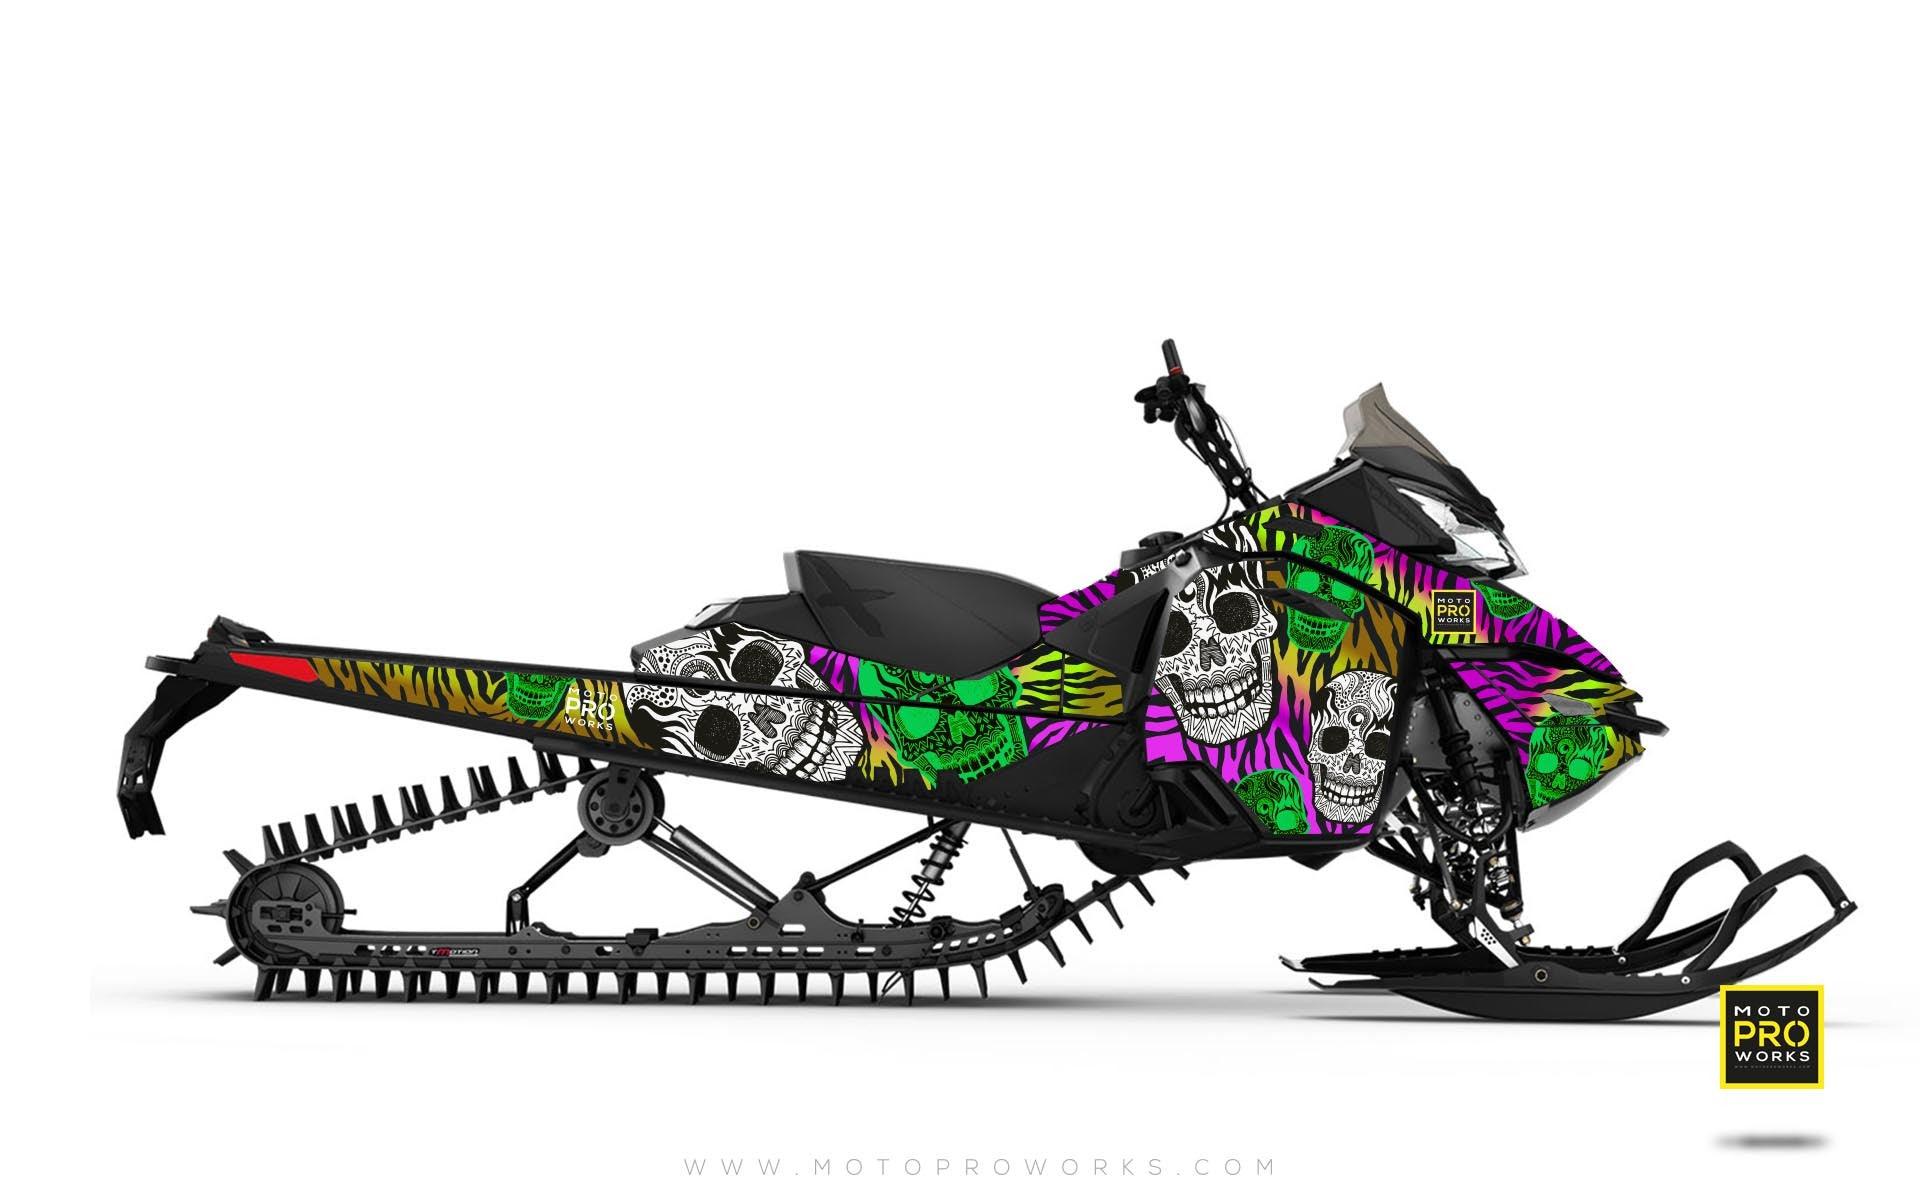 Ski-Doo Graphics - "Fiesta" (zink) - MotoProWorks | Decals and Bike Graphic kit